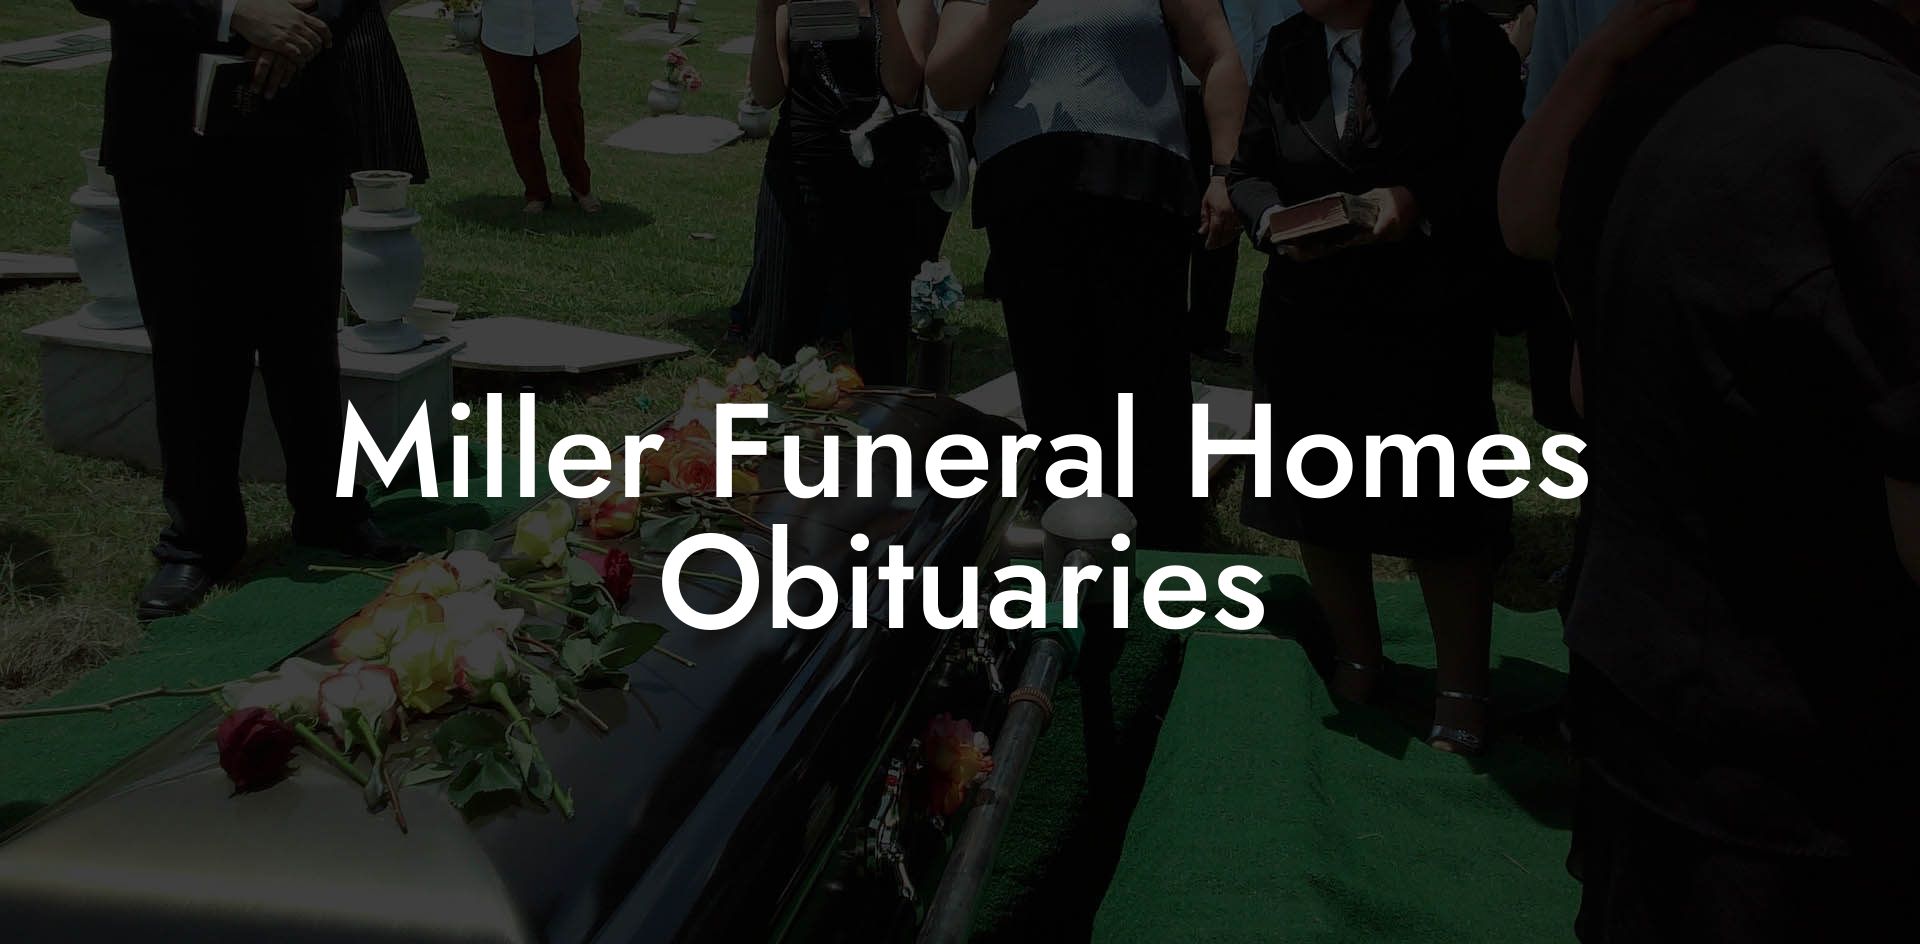 Miller Funeral Homes Obituaries